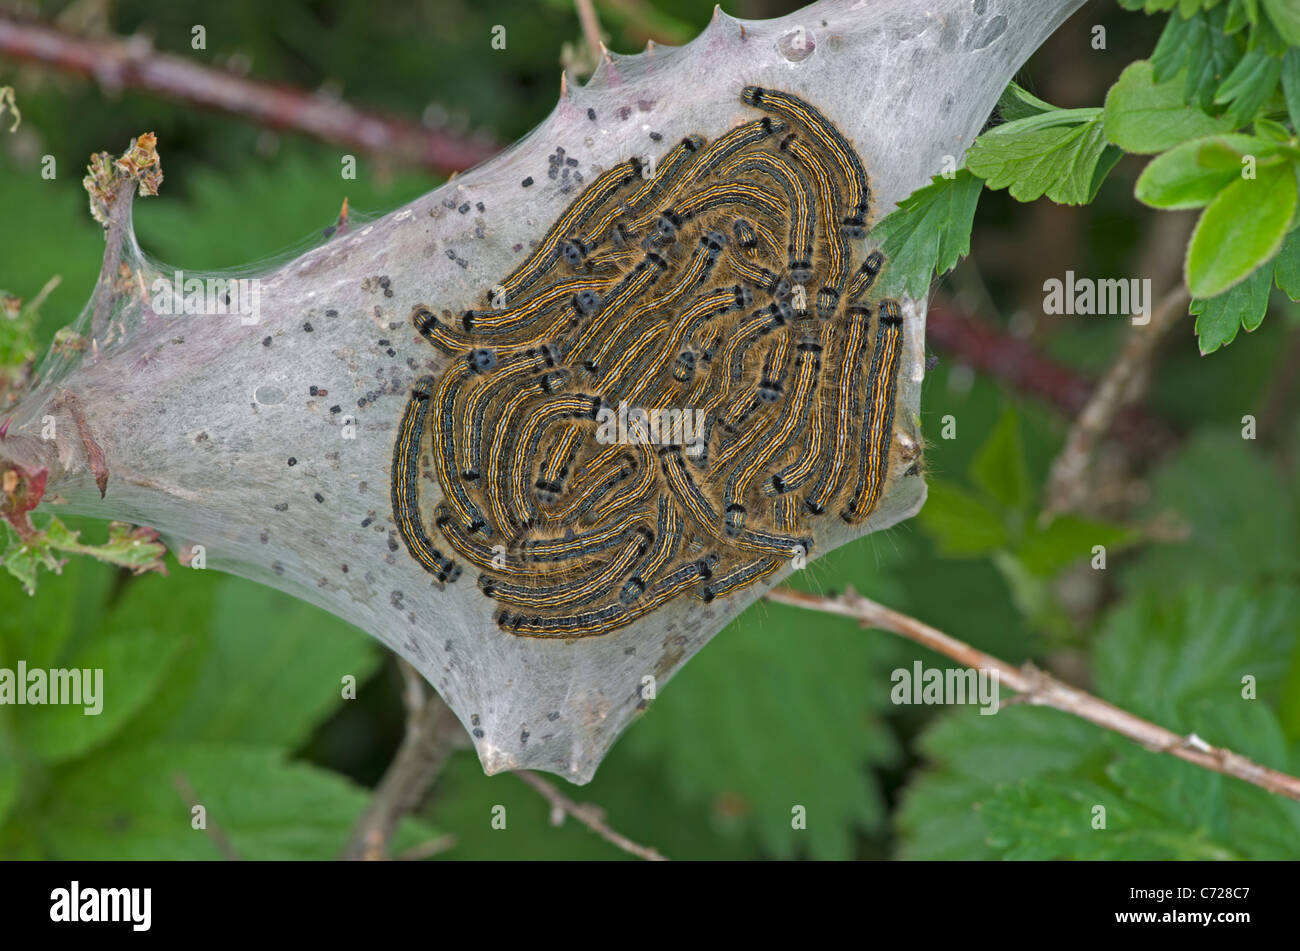 A web of Lackey Moth Caterpillars, Caergeiliog, Anglesey, Wales, UK. Stock Photo